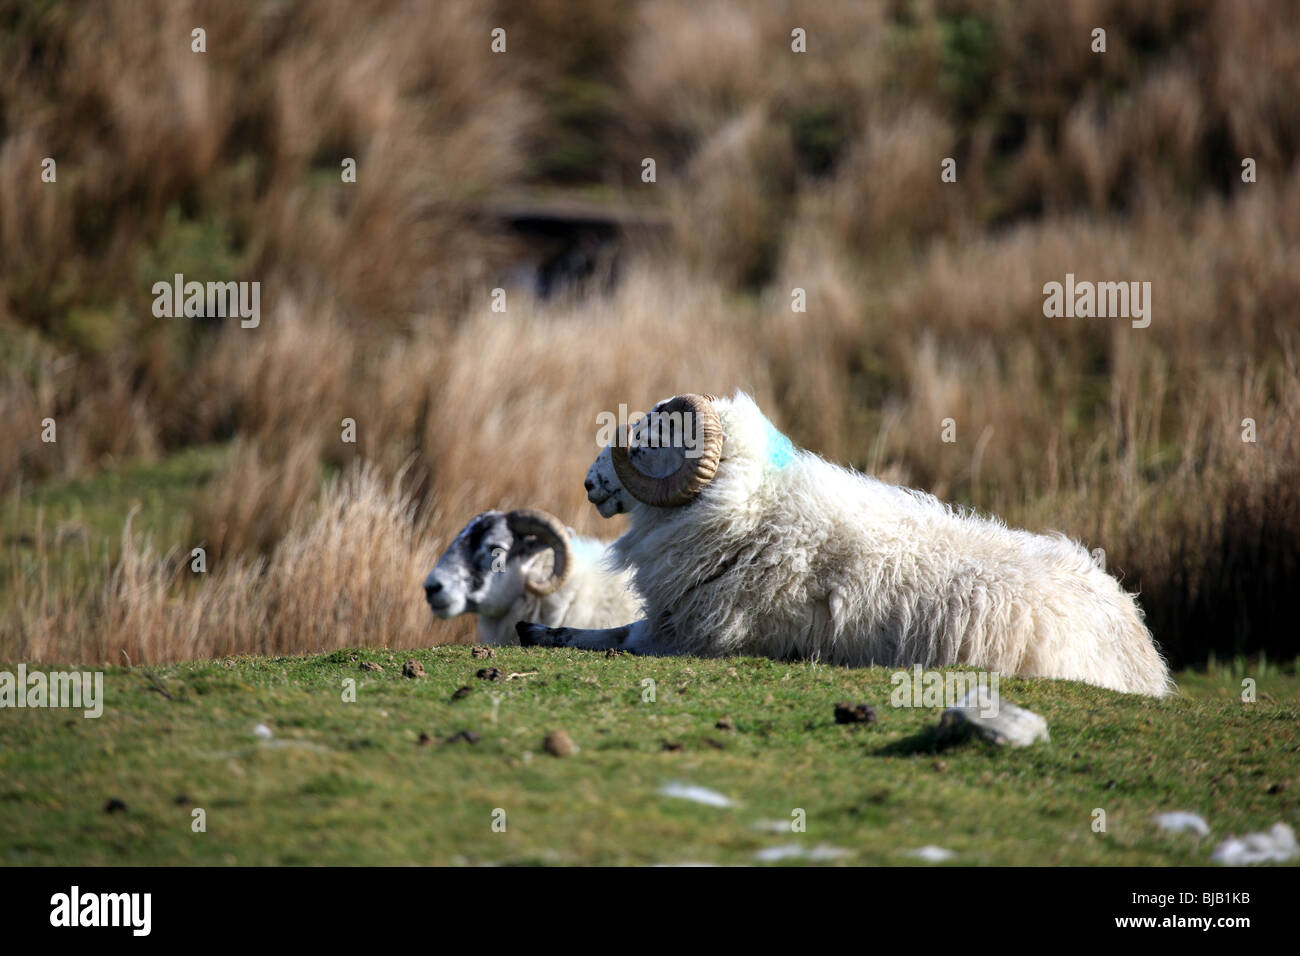 Sheep lying in field enjoying the sunshine Stock Photo